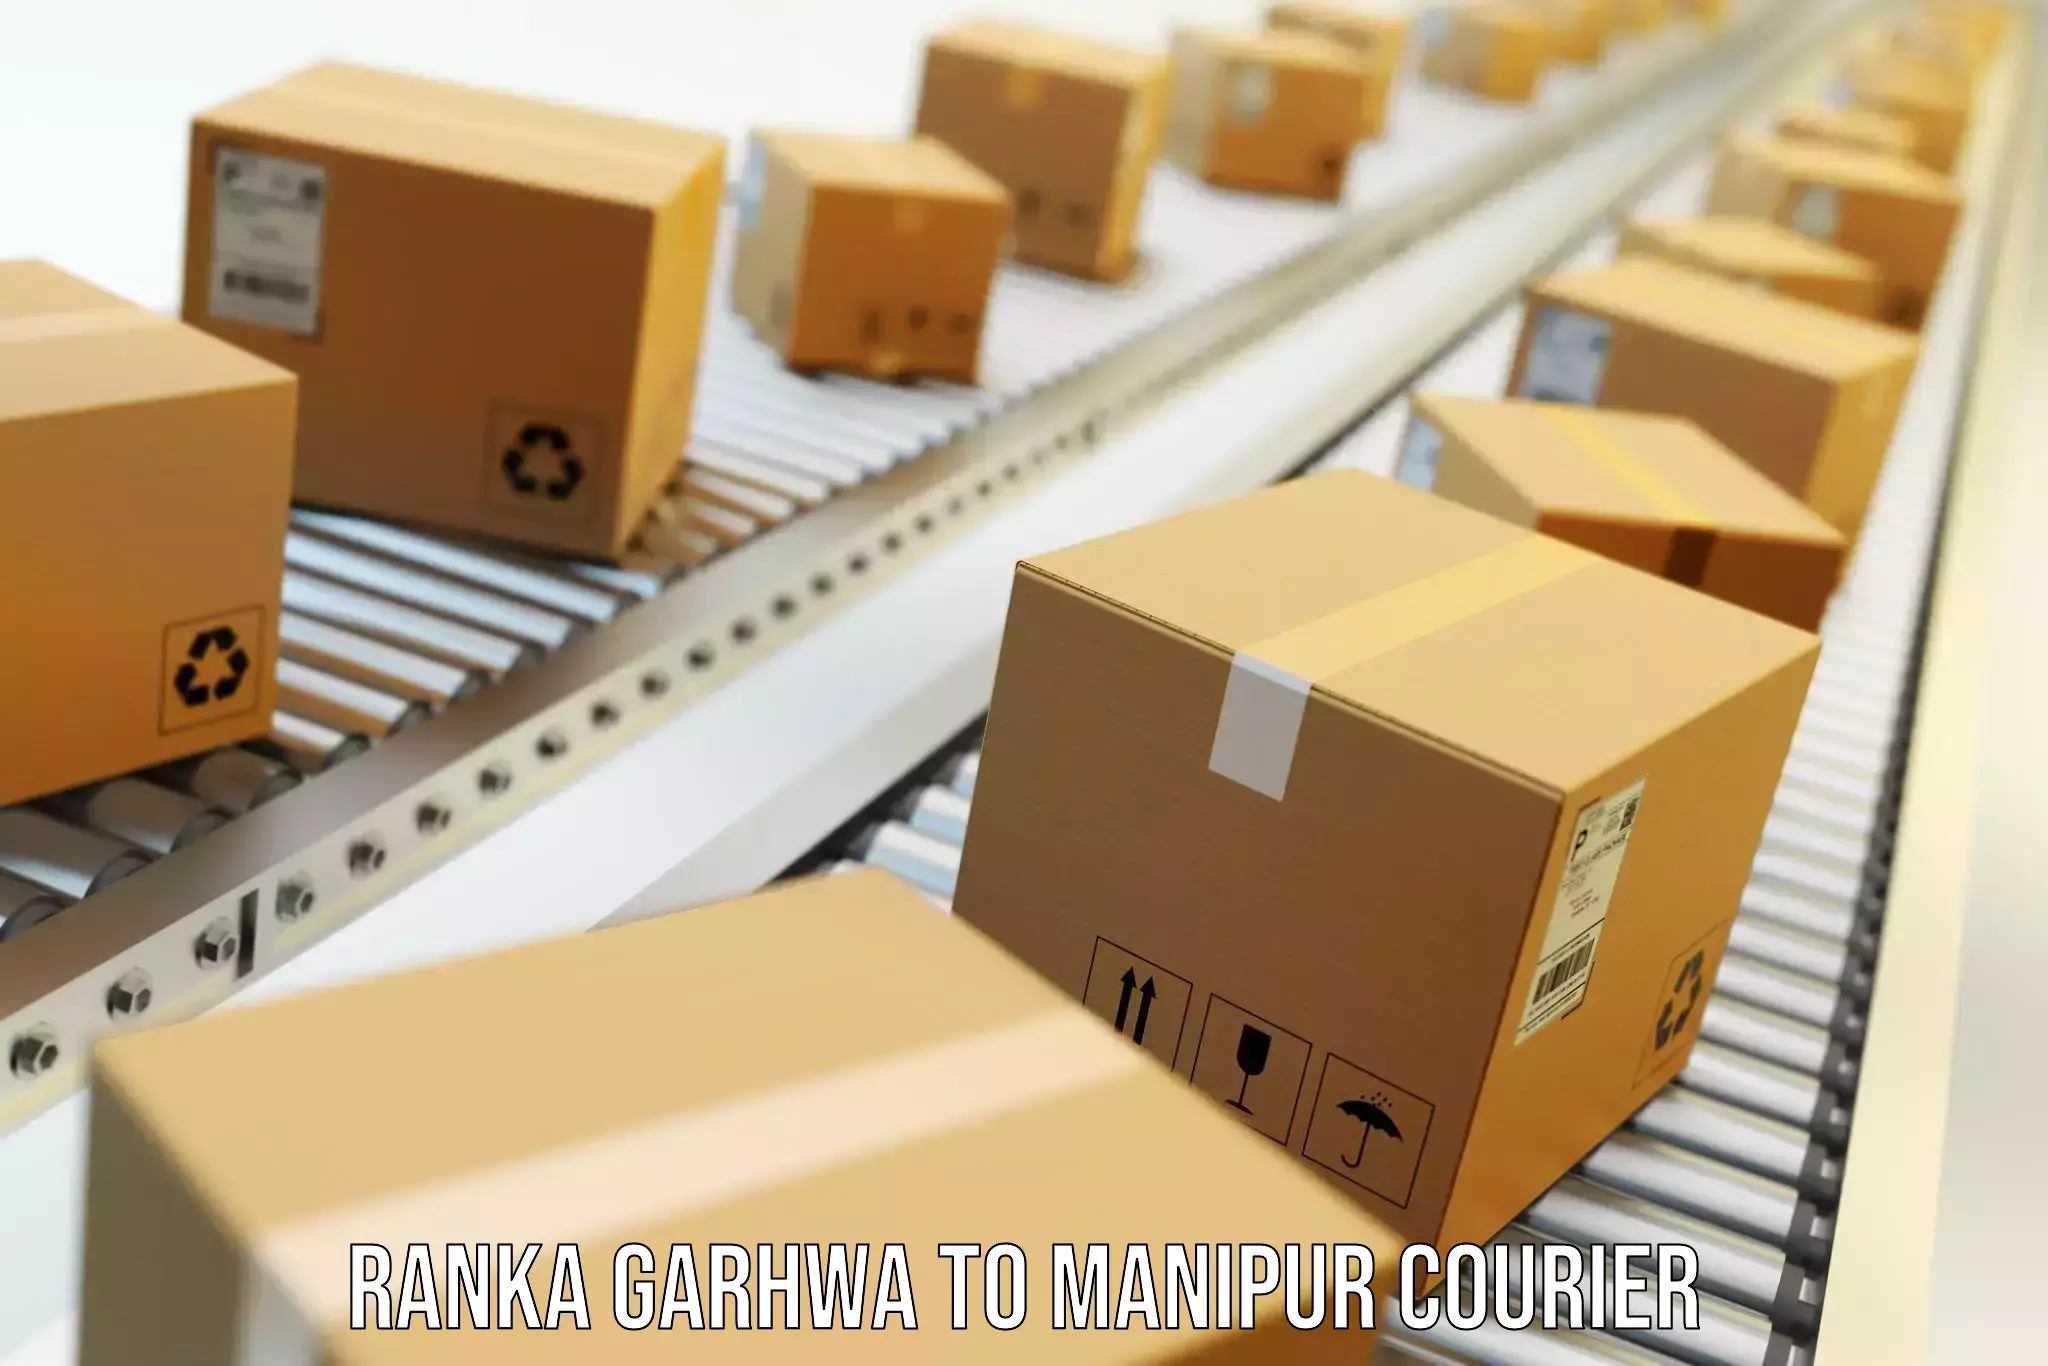 Expert moving and storage Ranka Garhwa to Kanti